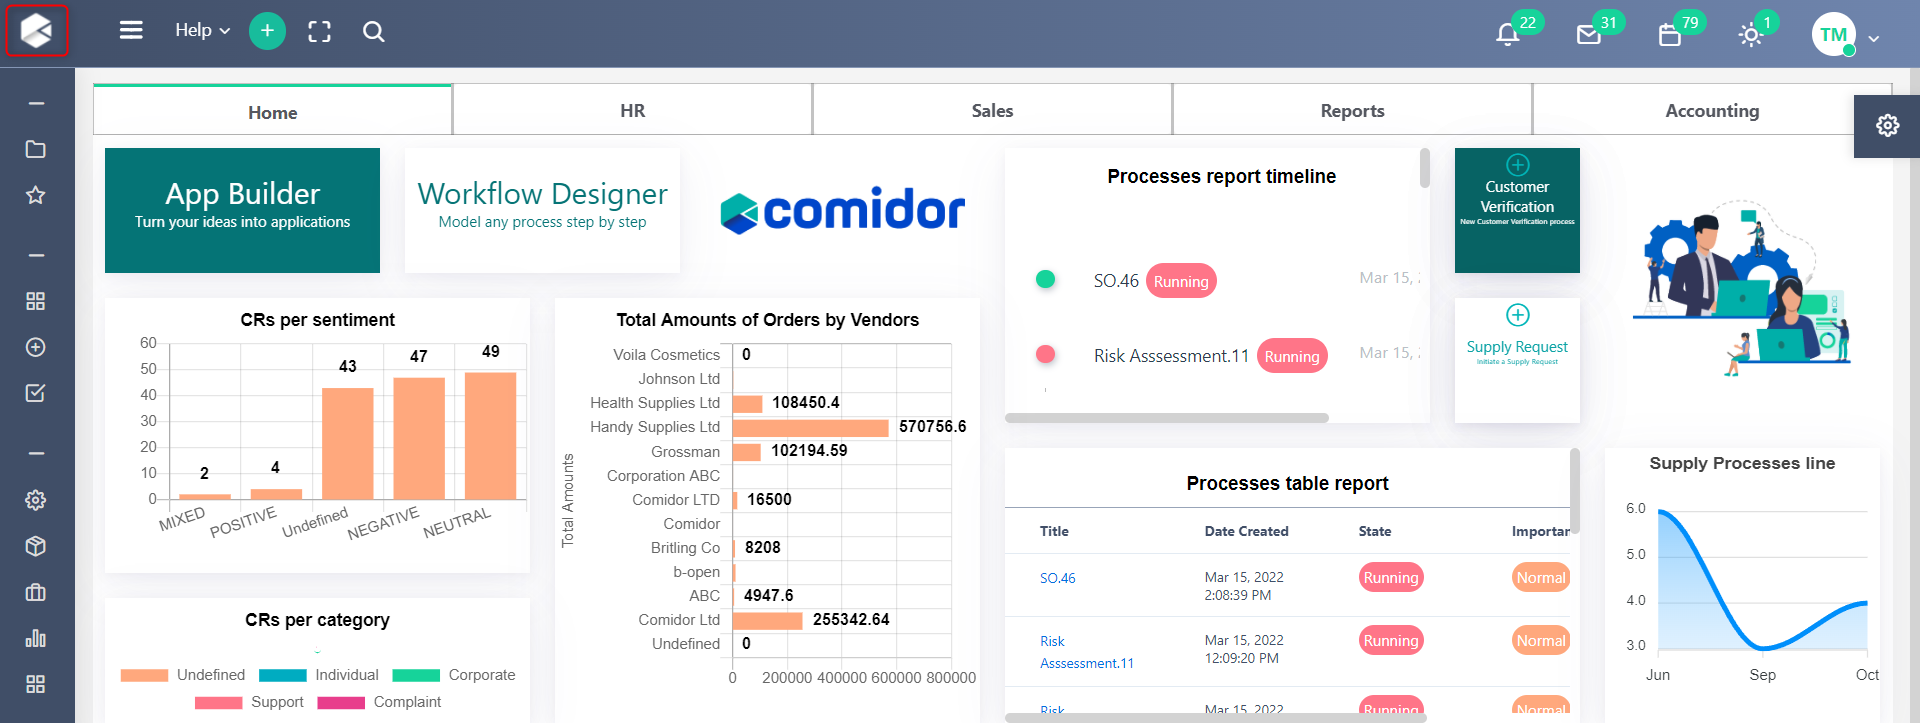 Edit Home Dashboard v6.2 | Comidor Platform